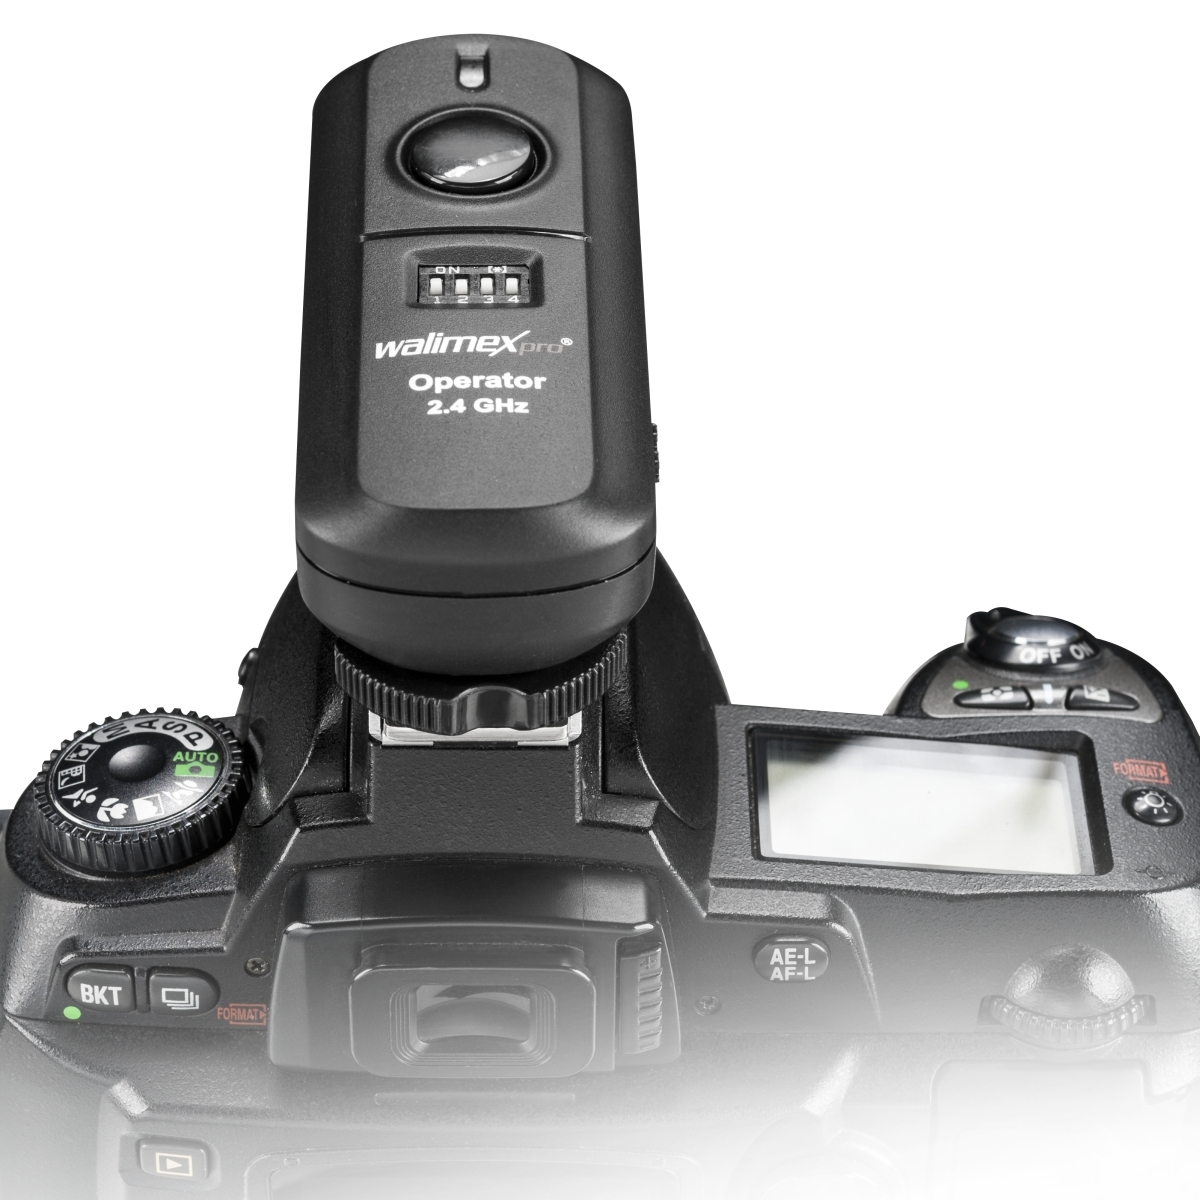 Walimex pro 3in1 Funkauslöser-Set Nikon 2.4 GHz